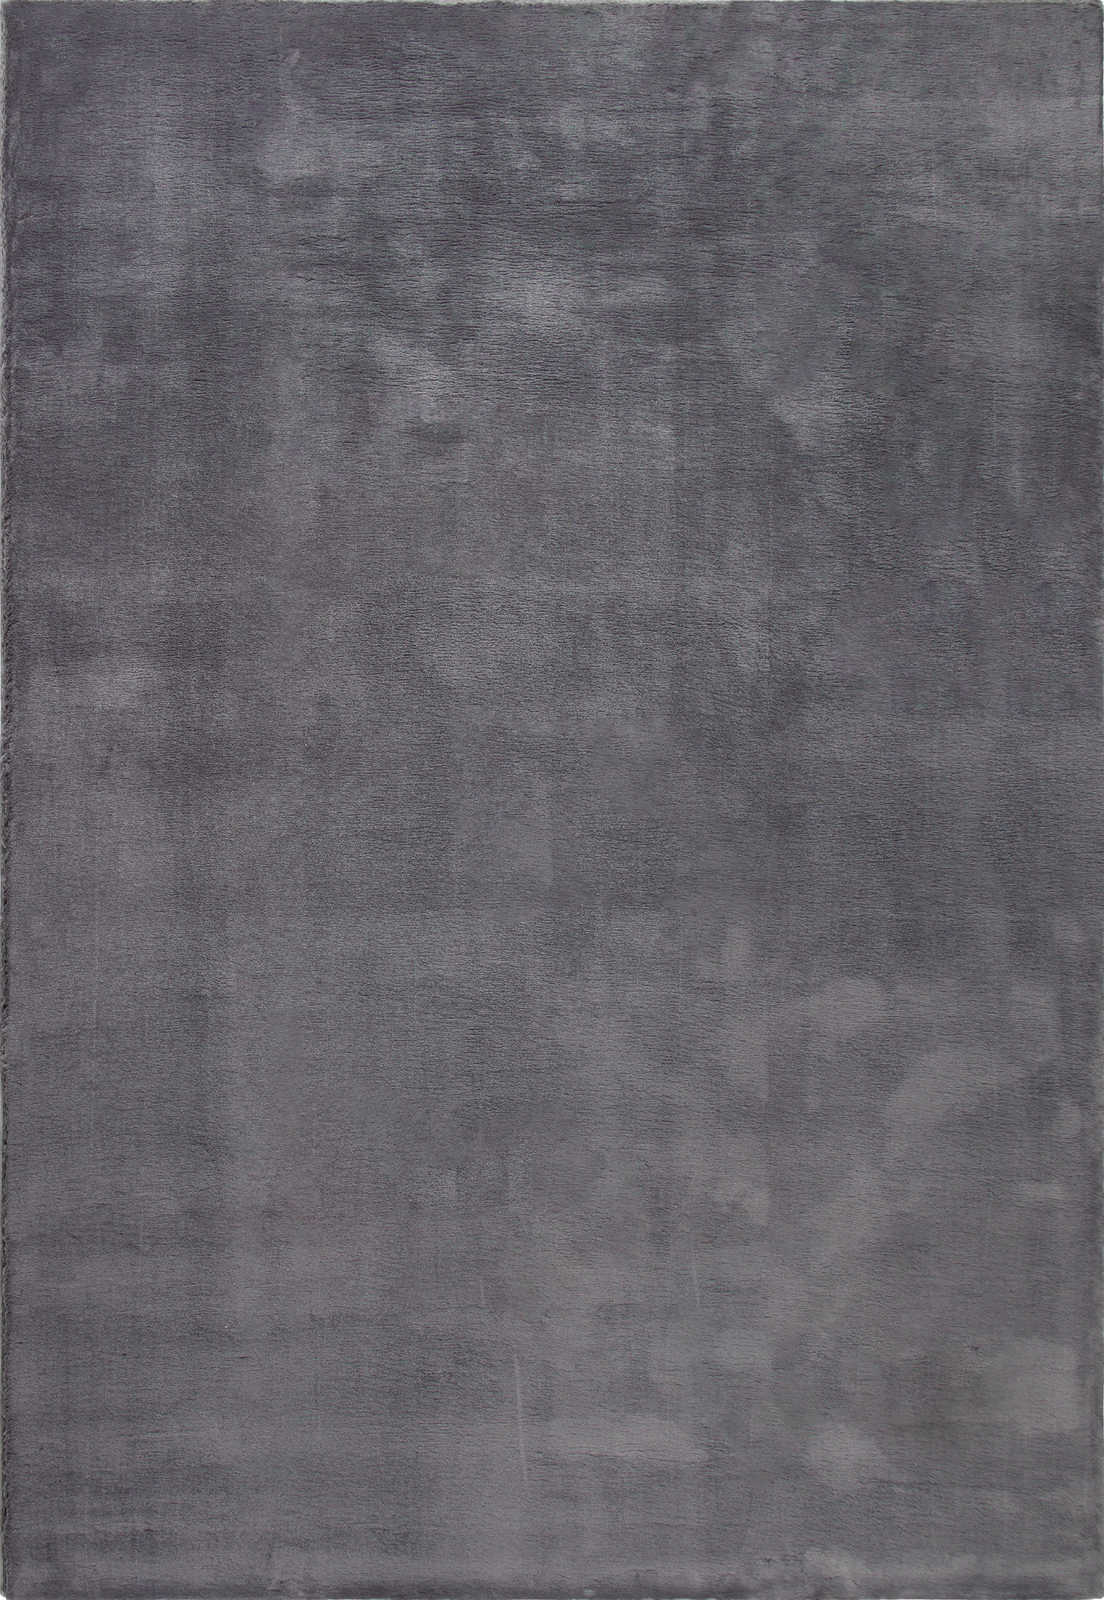             Tapis moderne à poils longs anthracite - 110 x 60 cm
        